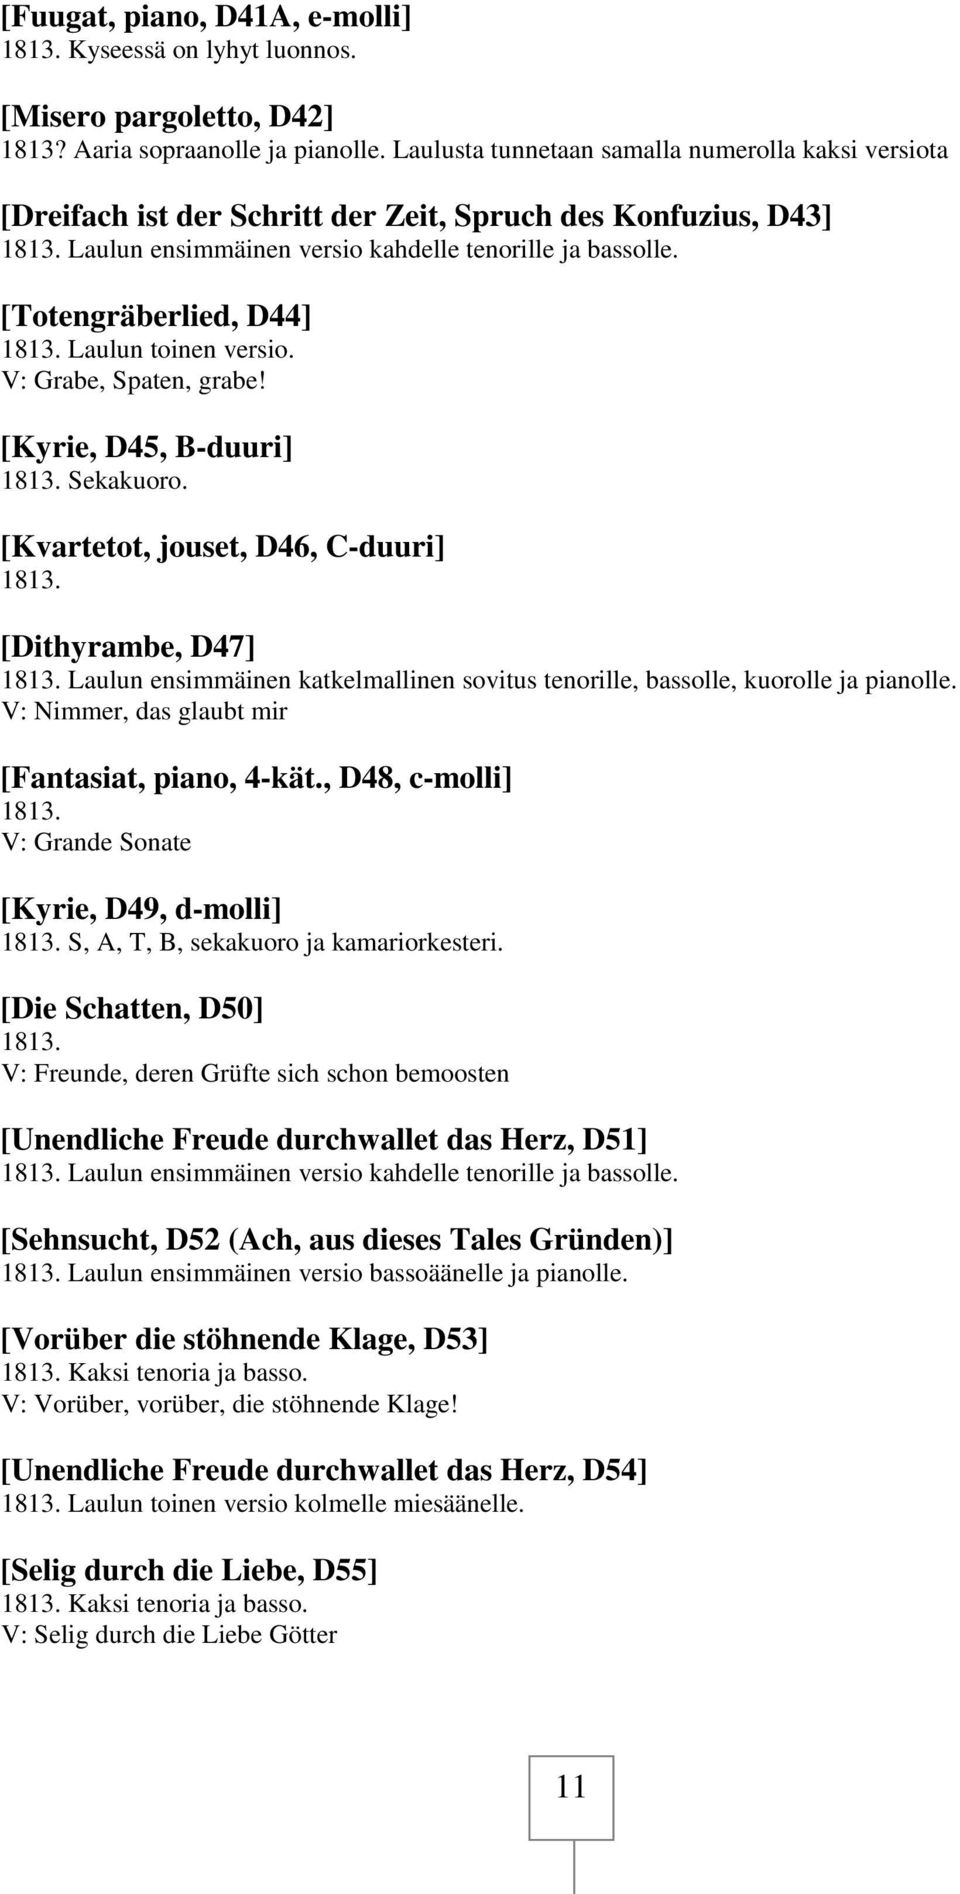 [Totengräberlied, D44] 1813. Laulun toinen versio. V: Grabe, Spaten, grabe! [Kyrie, D45, B-duuri] 1813. Sekakuoro. [Kvartetot, jouset, D46, C-duuri] 1813. [Dithyrambe, D47] 1813.